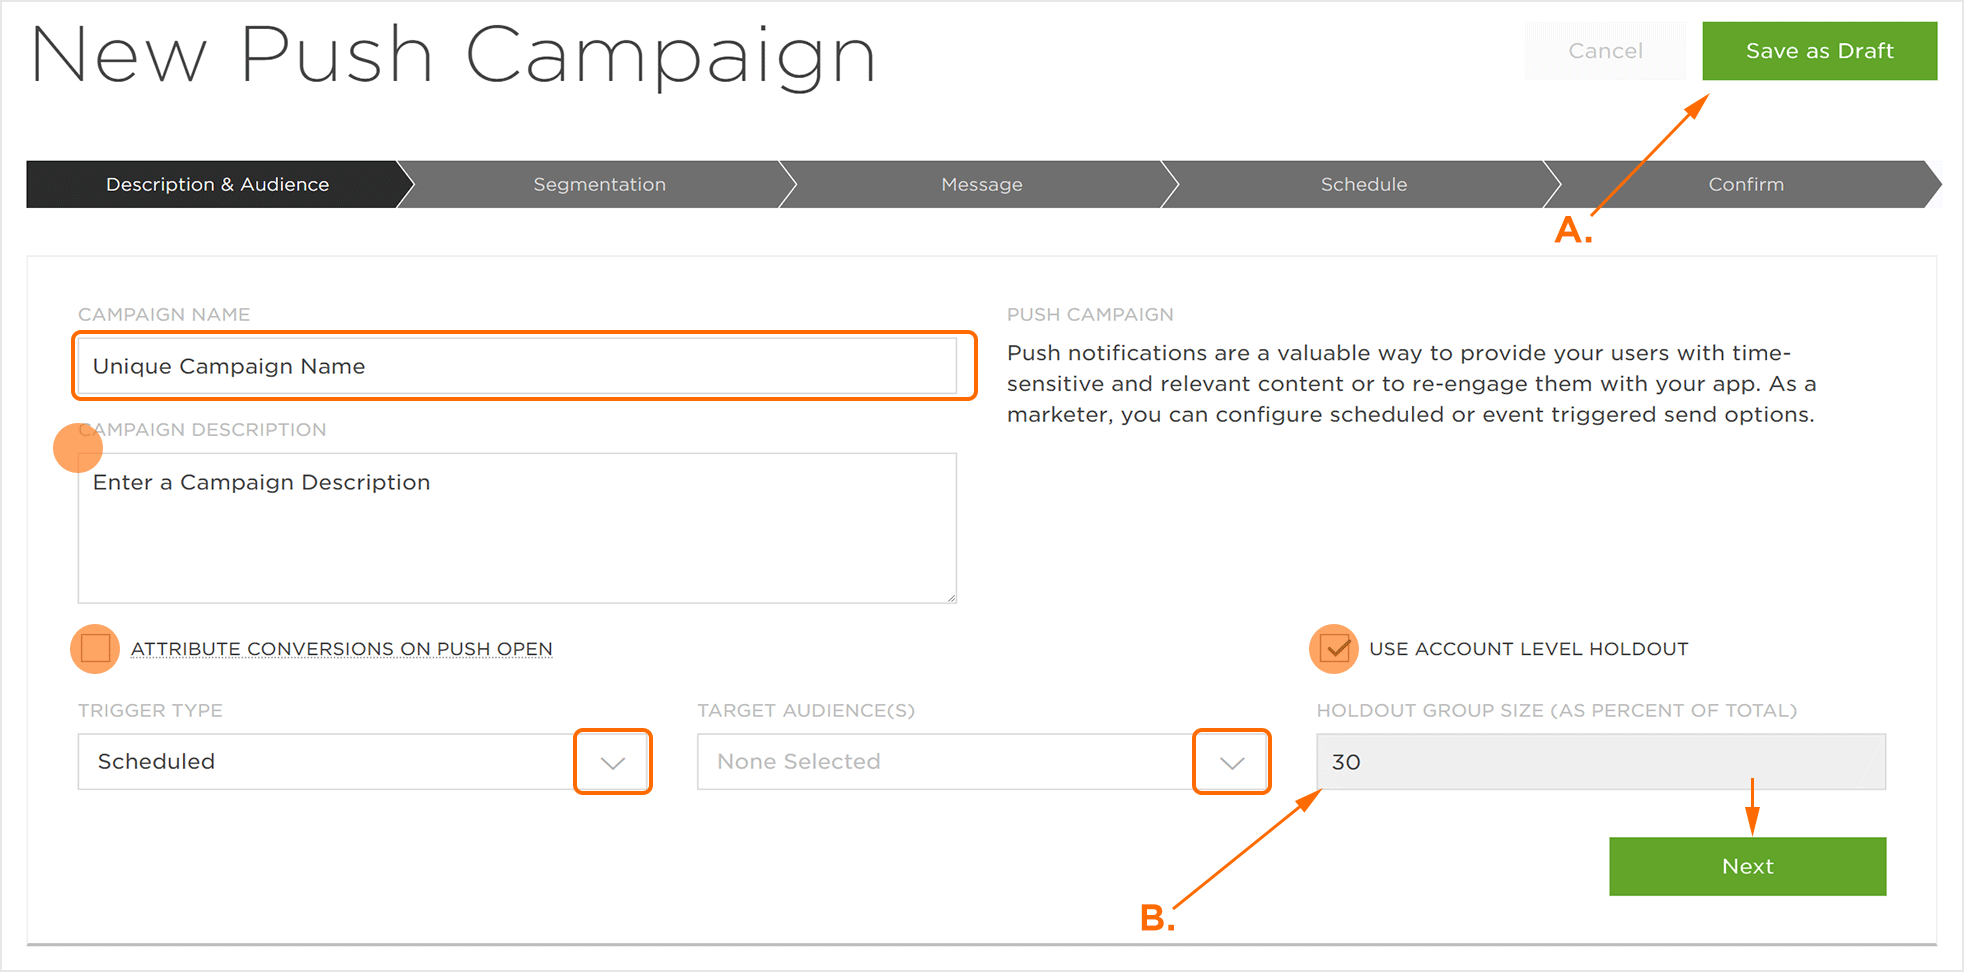 New Push Campaign Description